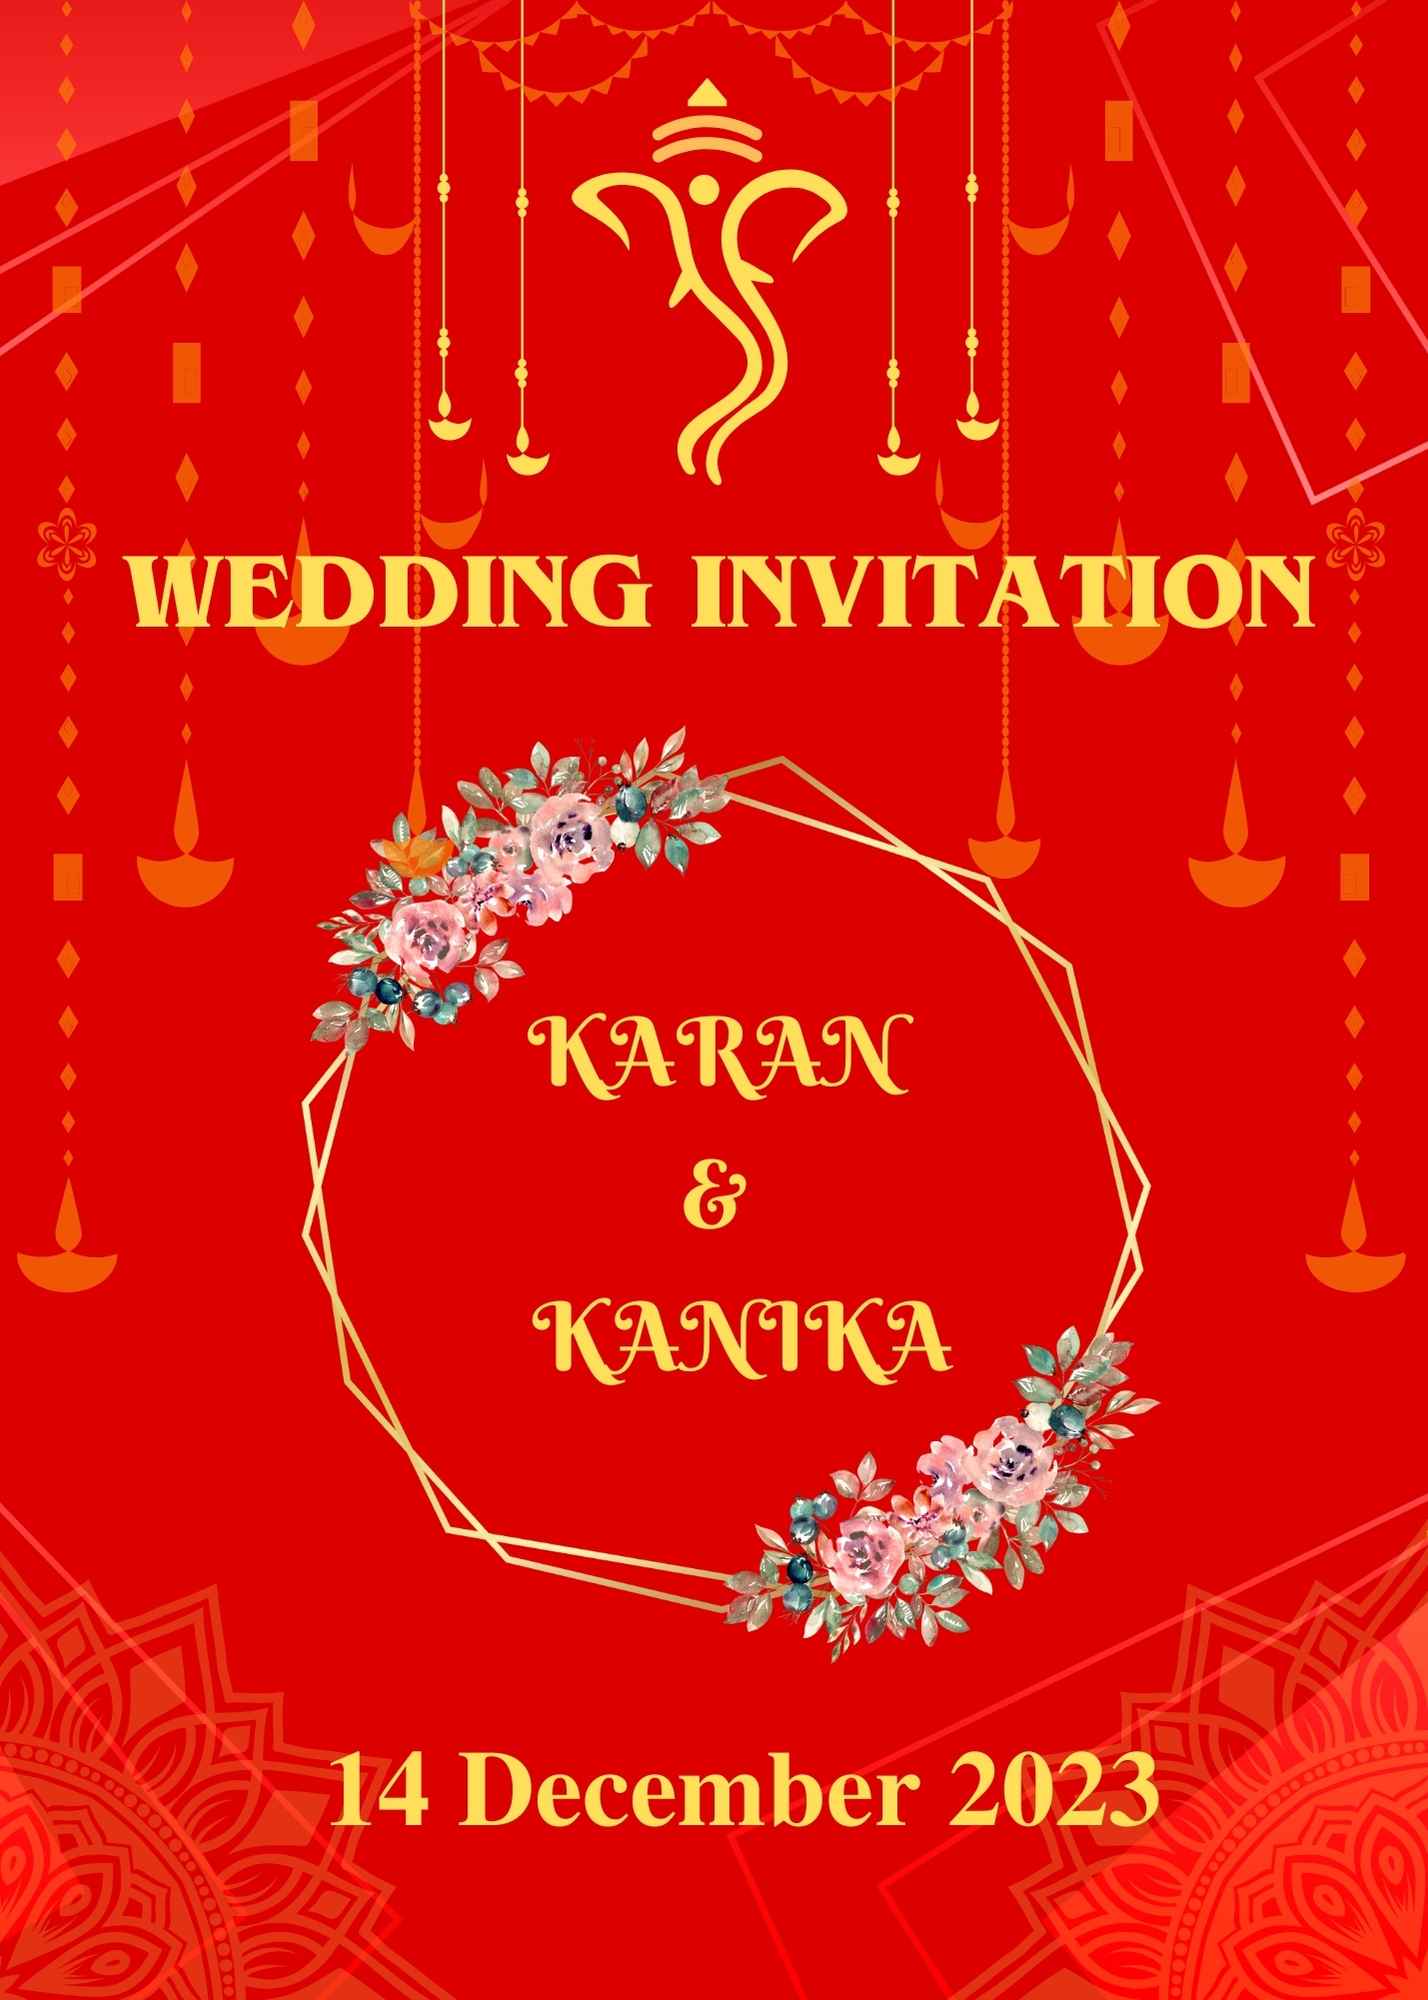 Hindi video wedding invite